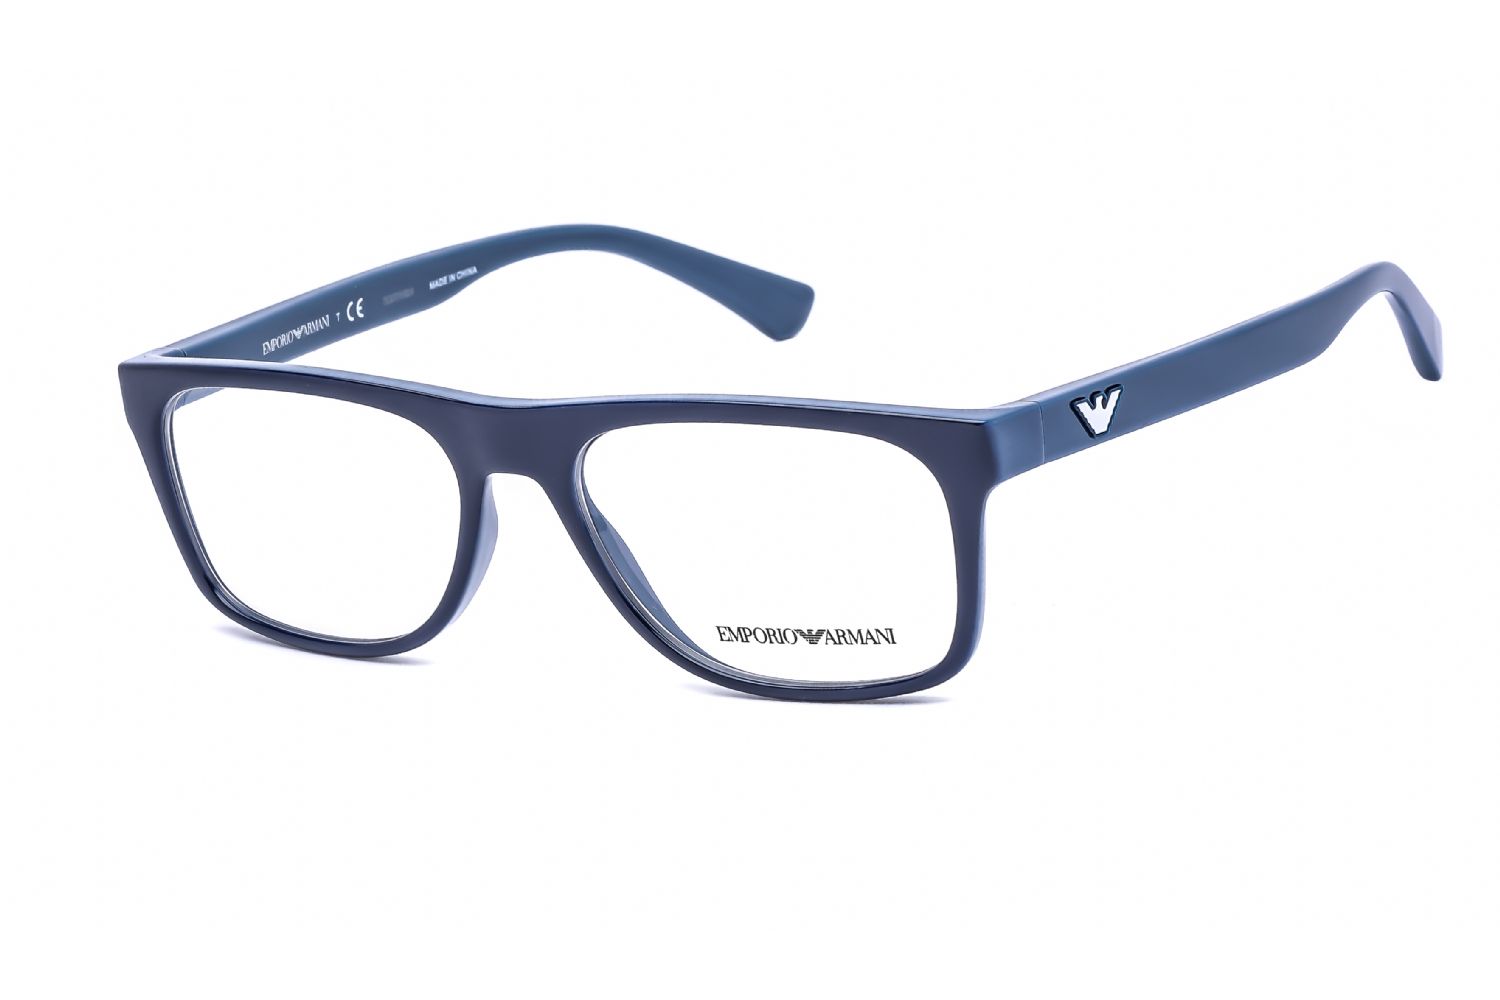 StyleName: Emporio Armani EA3097 Eyeglasses Dark Blue / Azure / Clear Lens Brand: Emporio Armani Frame Style: Rectangular Frame Material: plastic Color : Dark Blue / Azure / Clear Lens Men Eyeglasses